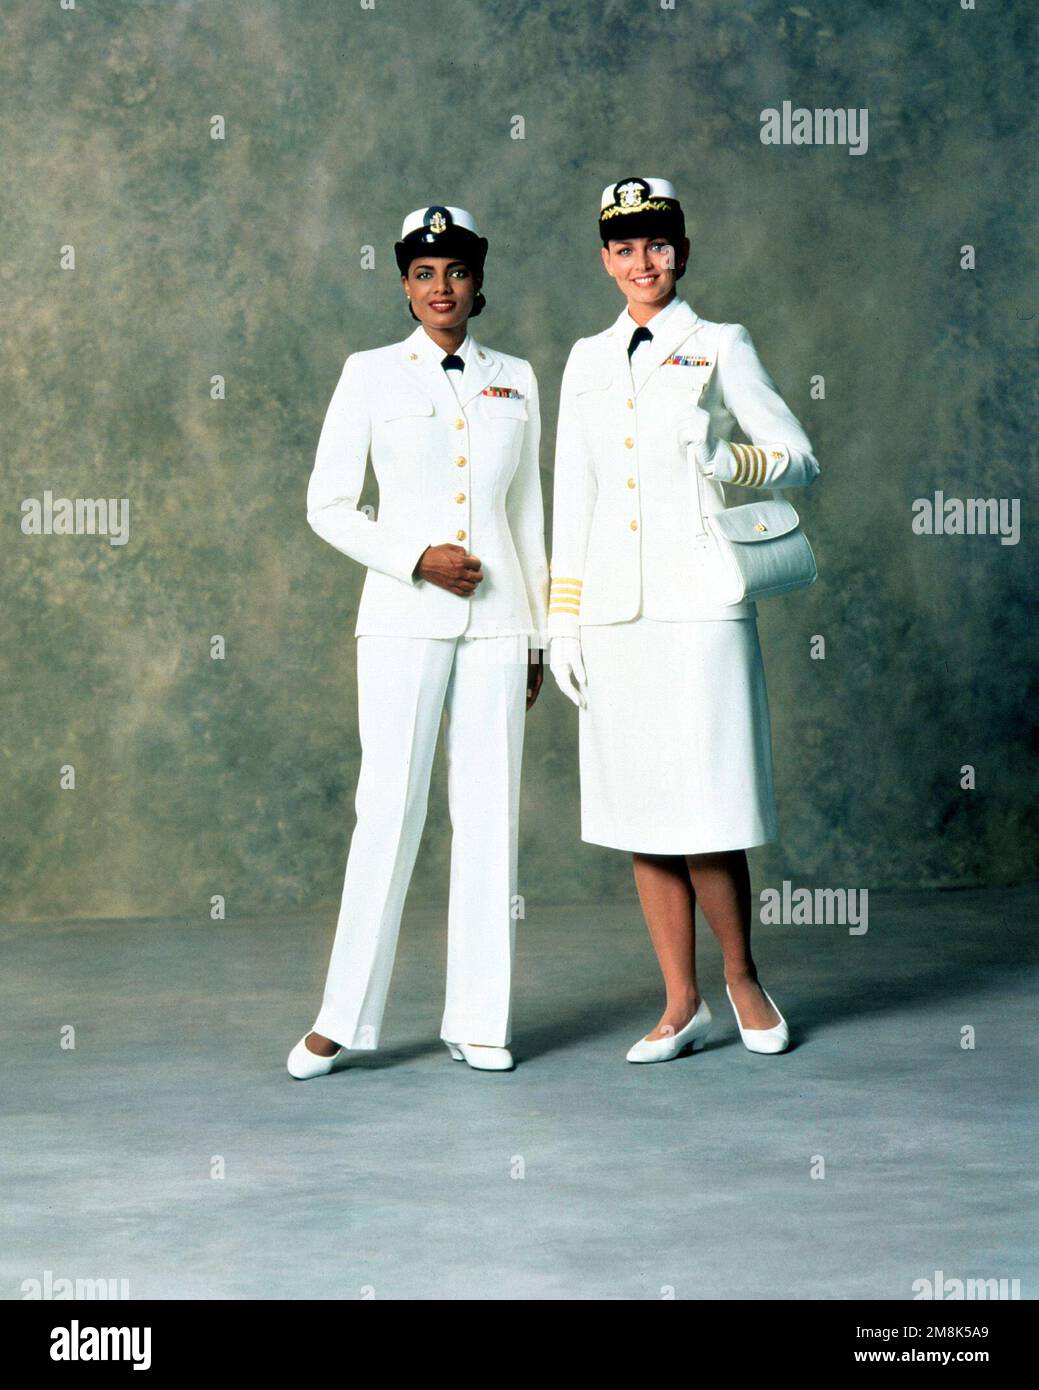 Women's Service Dress White Slacks